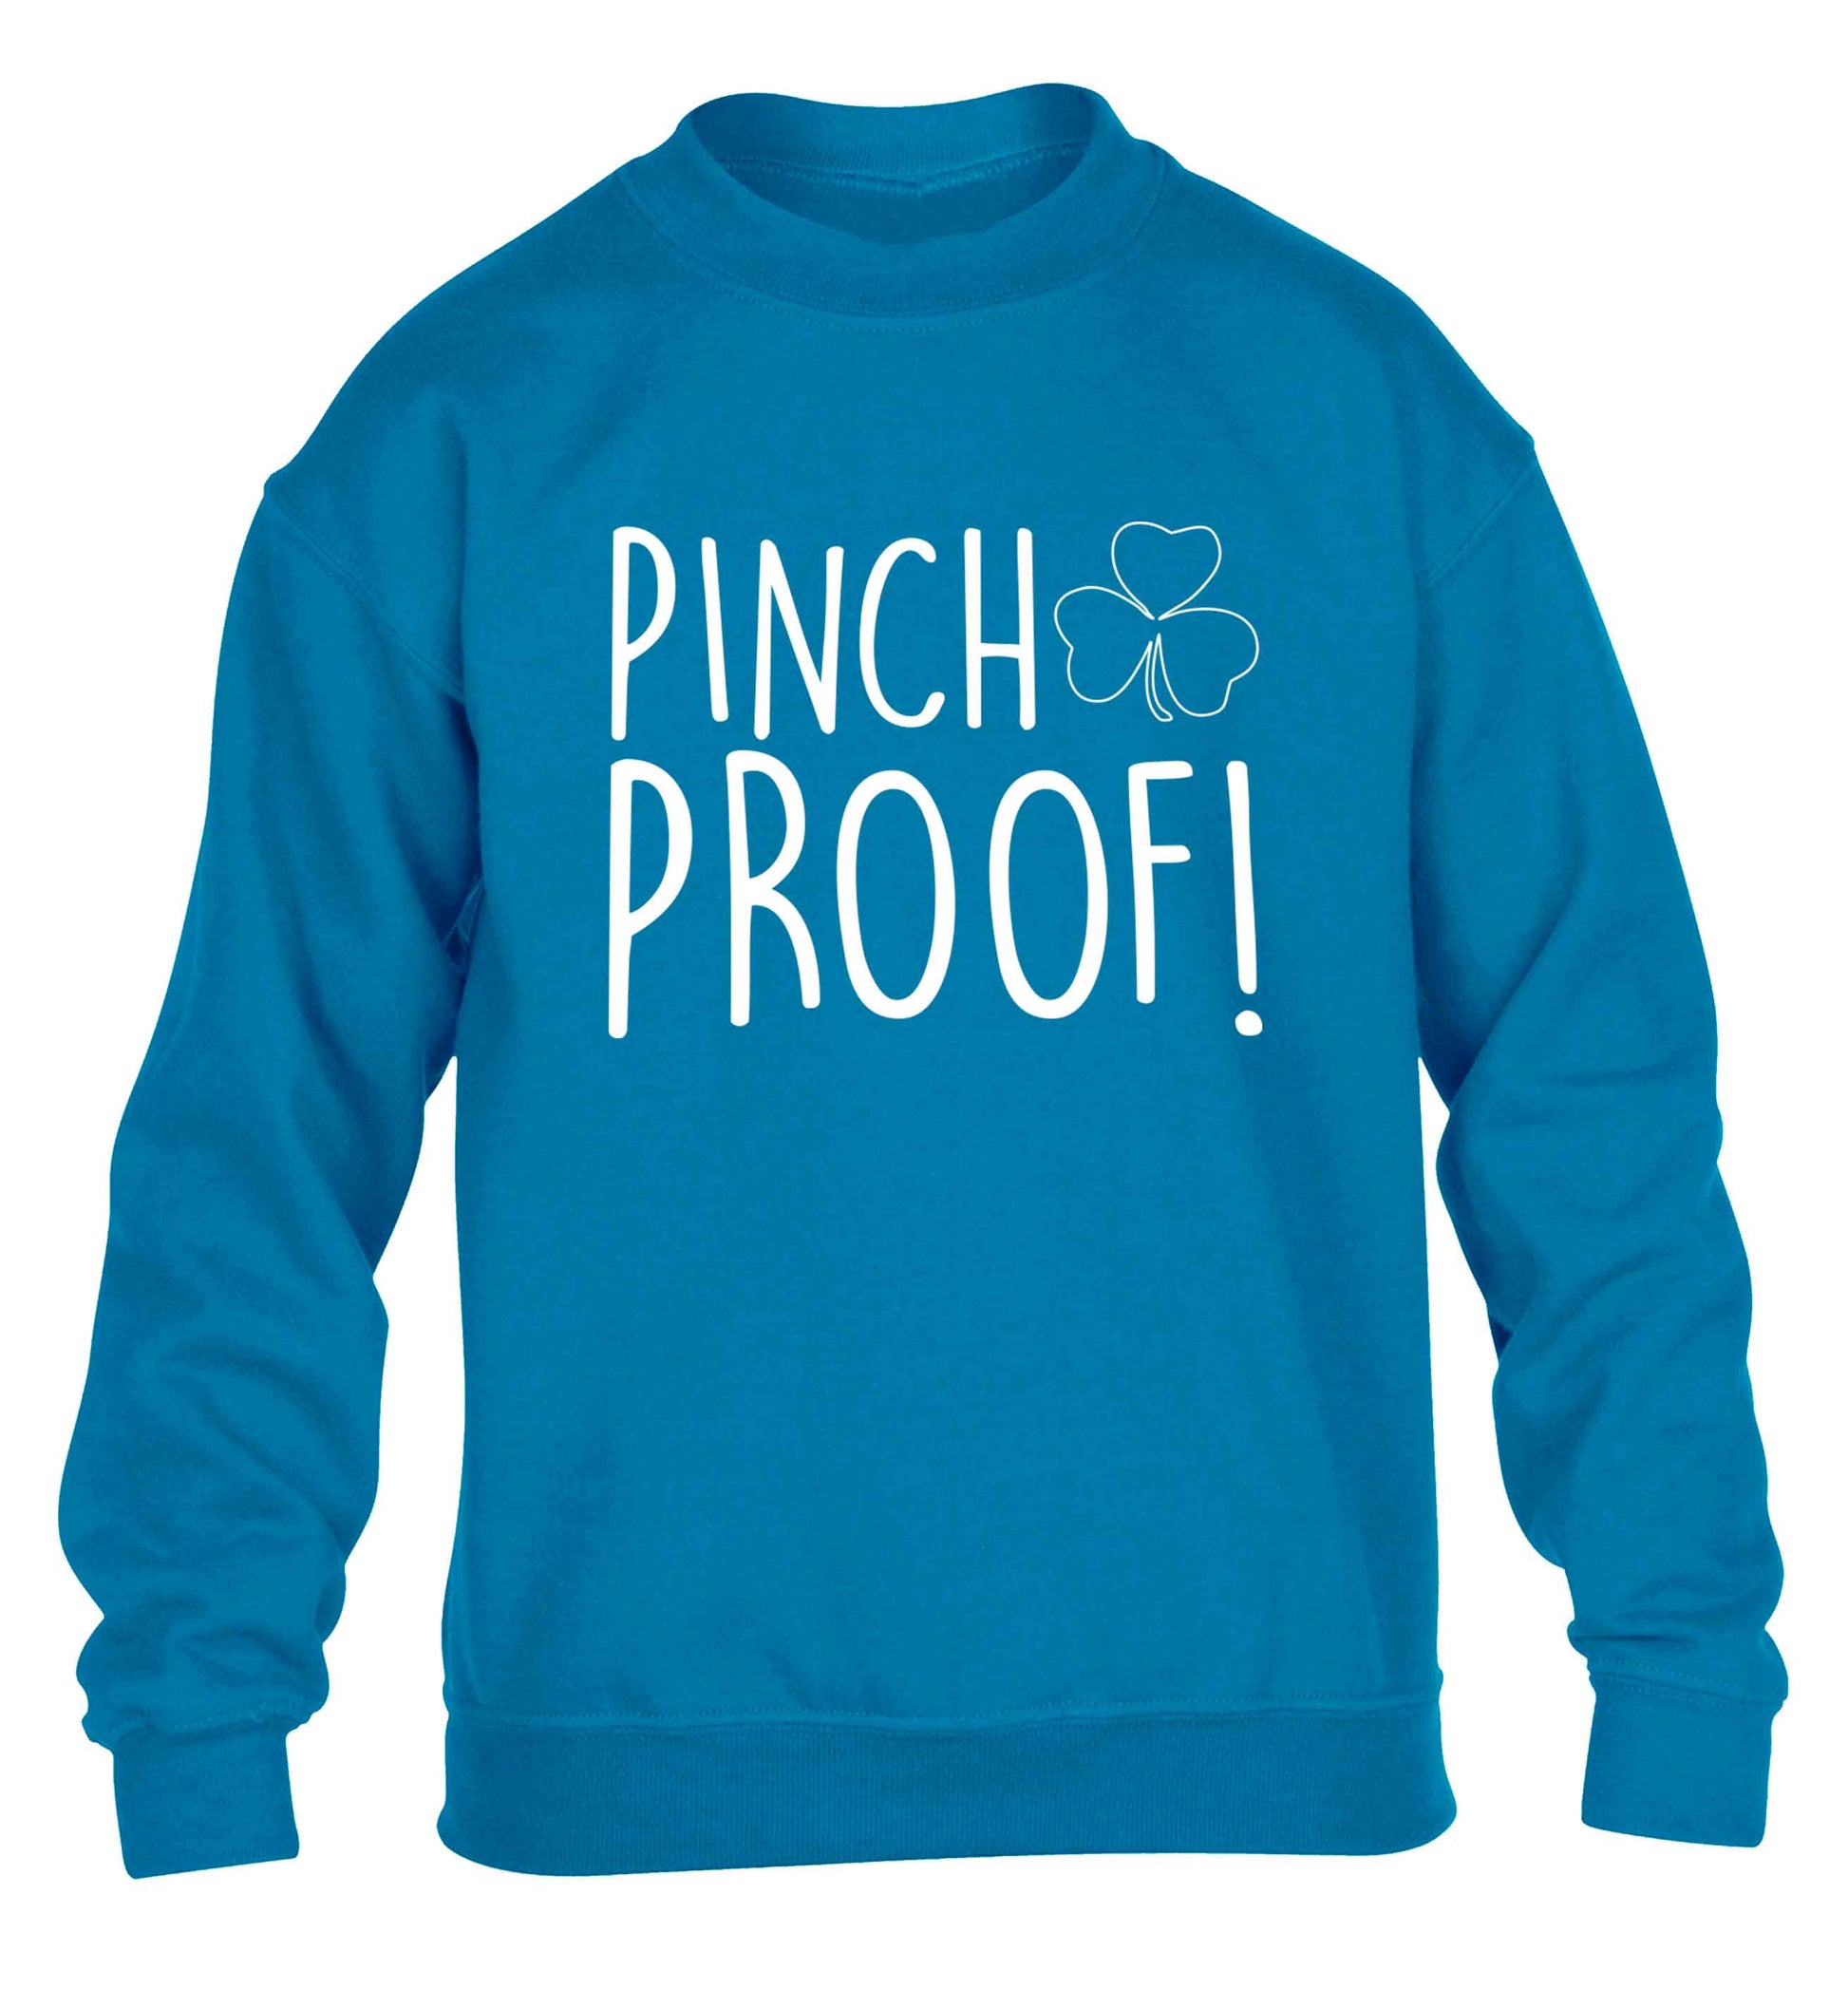 Pinch Proof children's blue sweater 12-13 Years